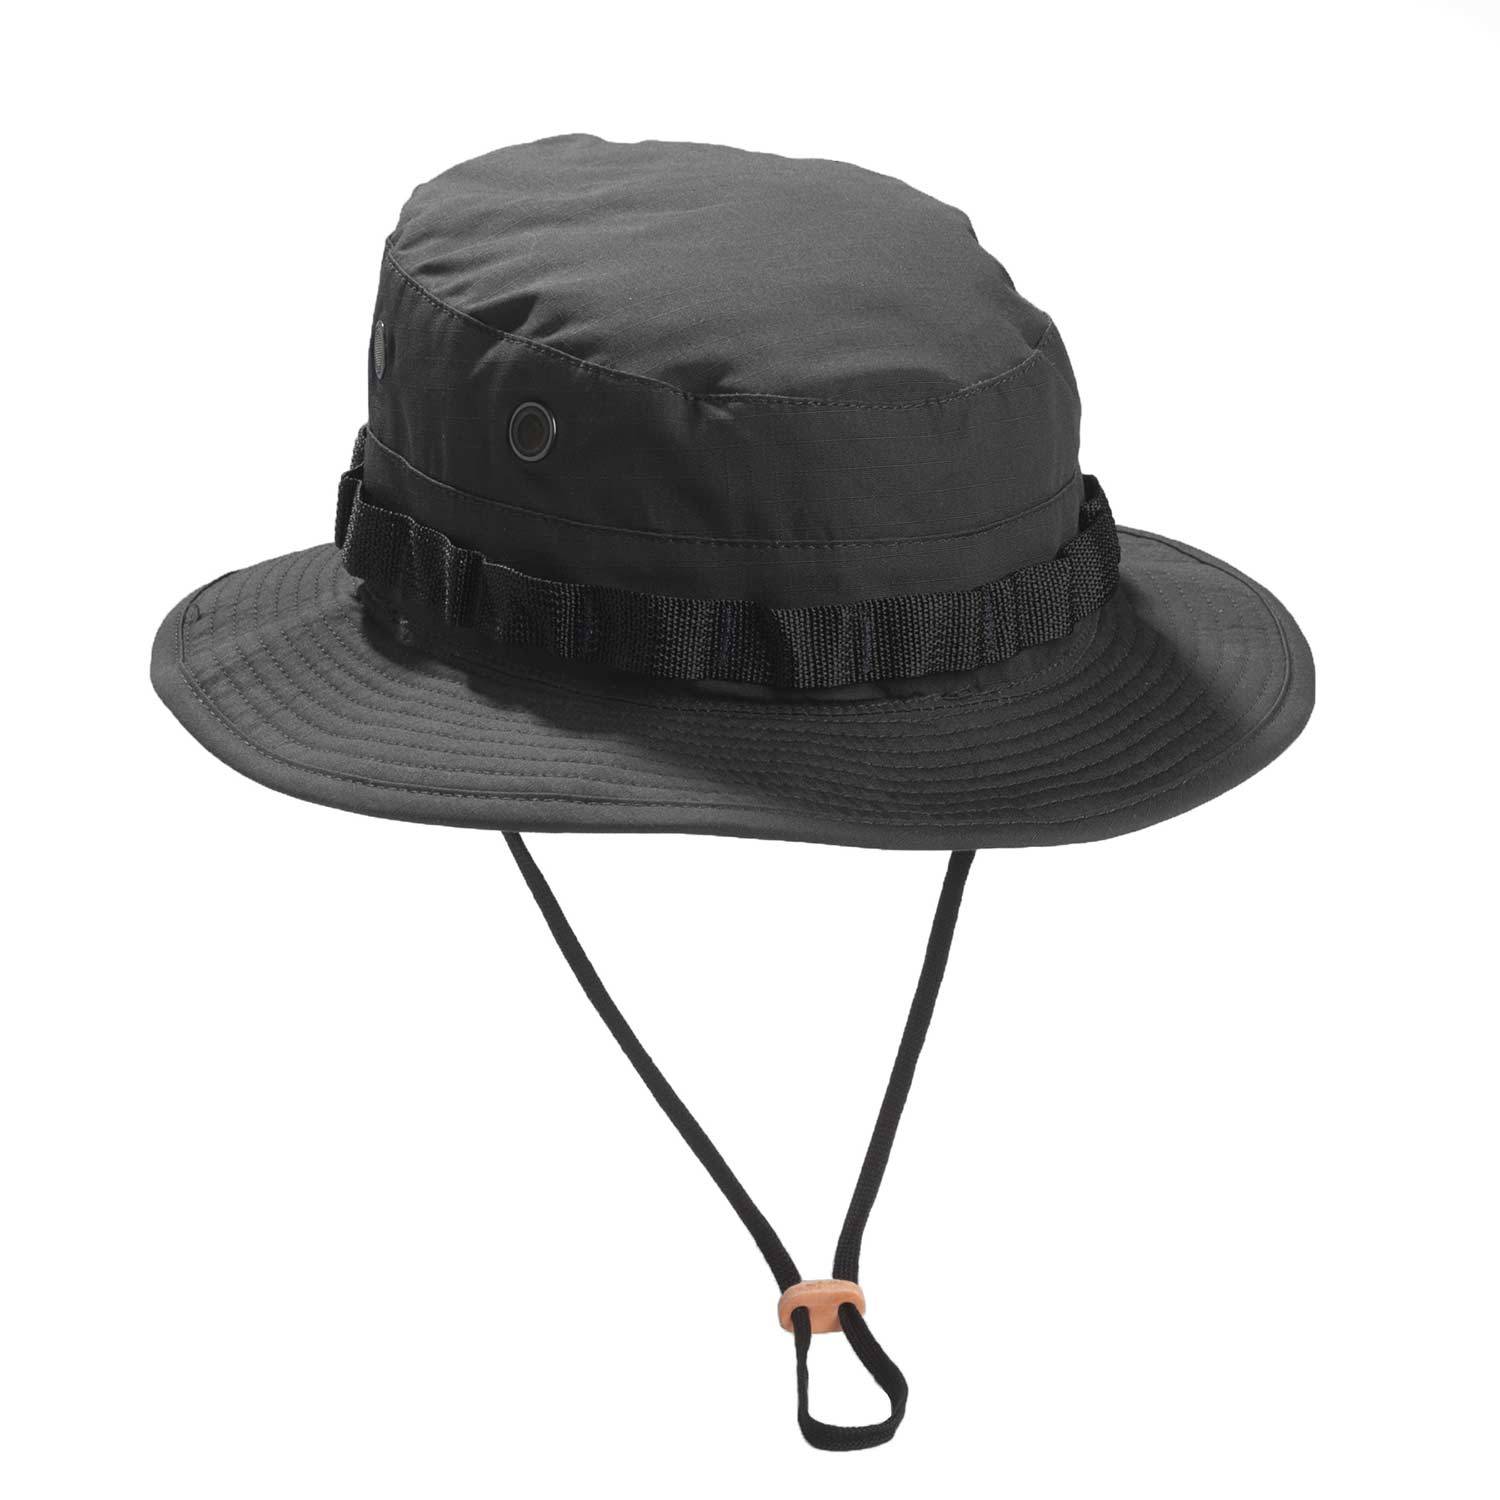 Apparel | Headwear | Caps and Hats | US Patriot Tactical